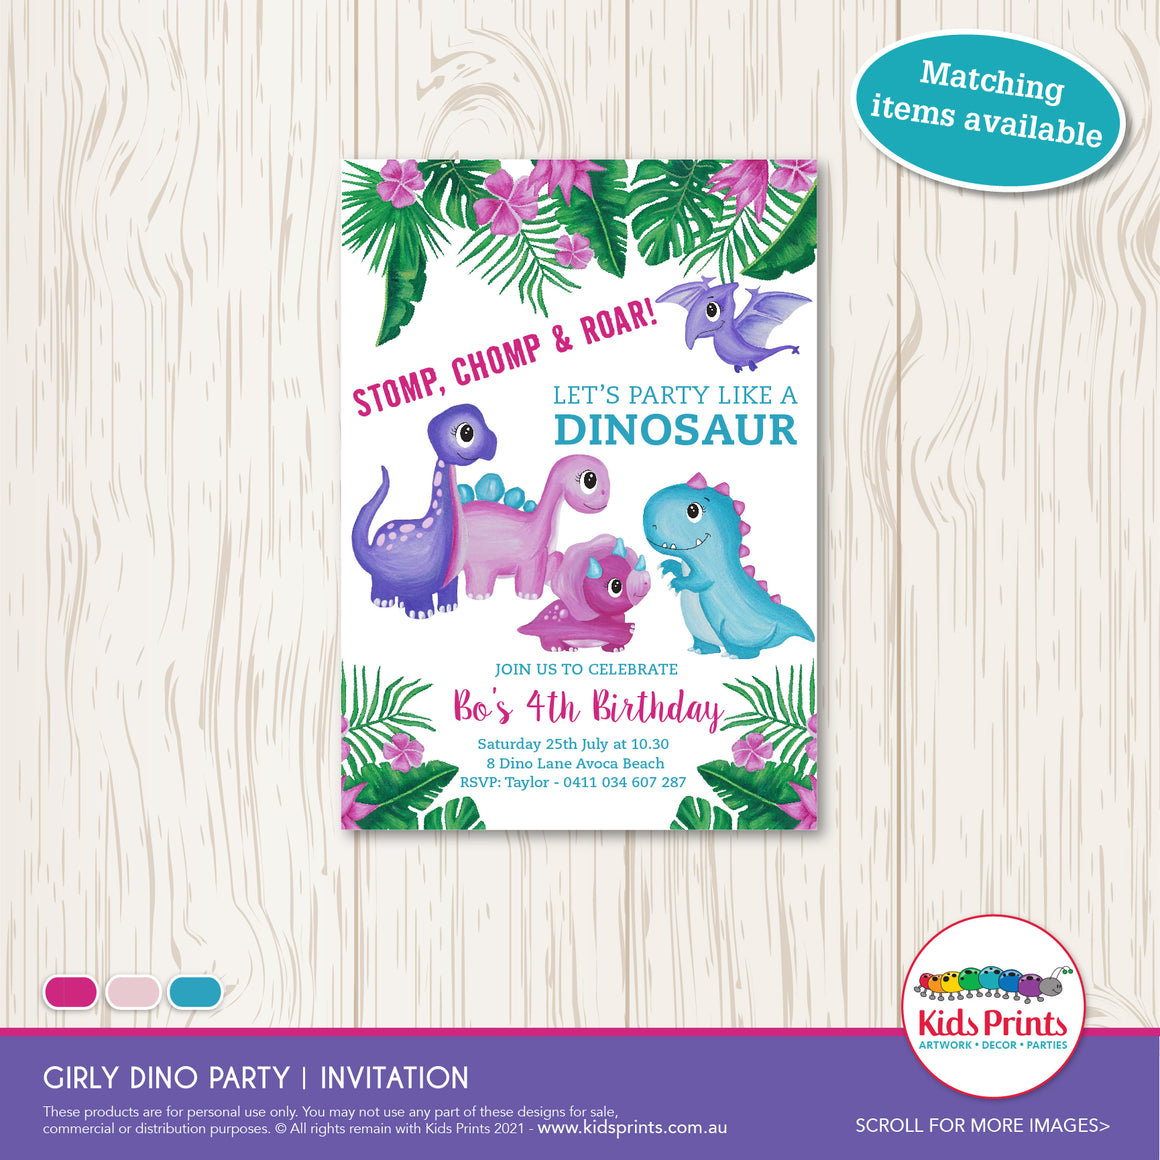 Little Dino Party | Invitation | Kids Prints